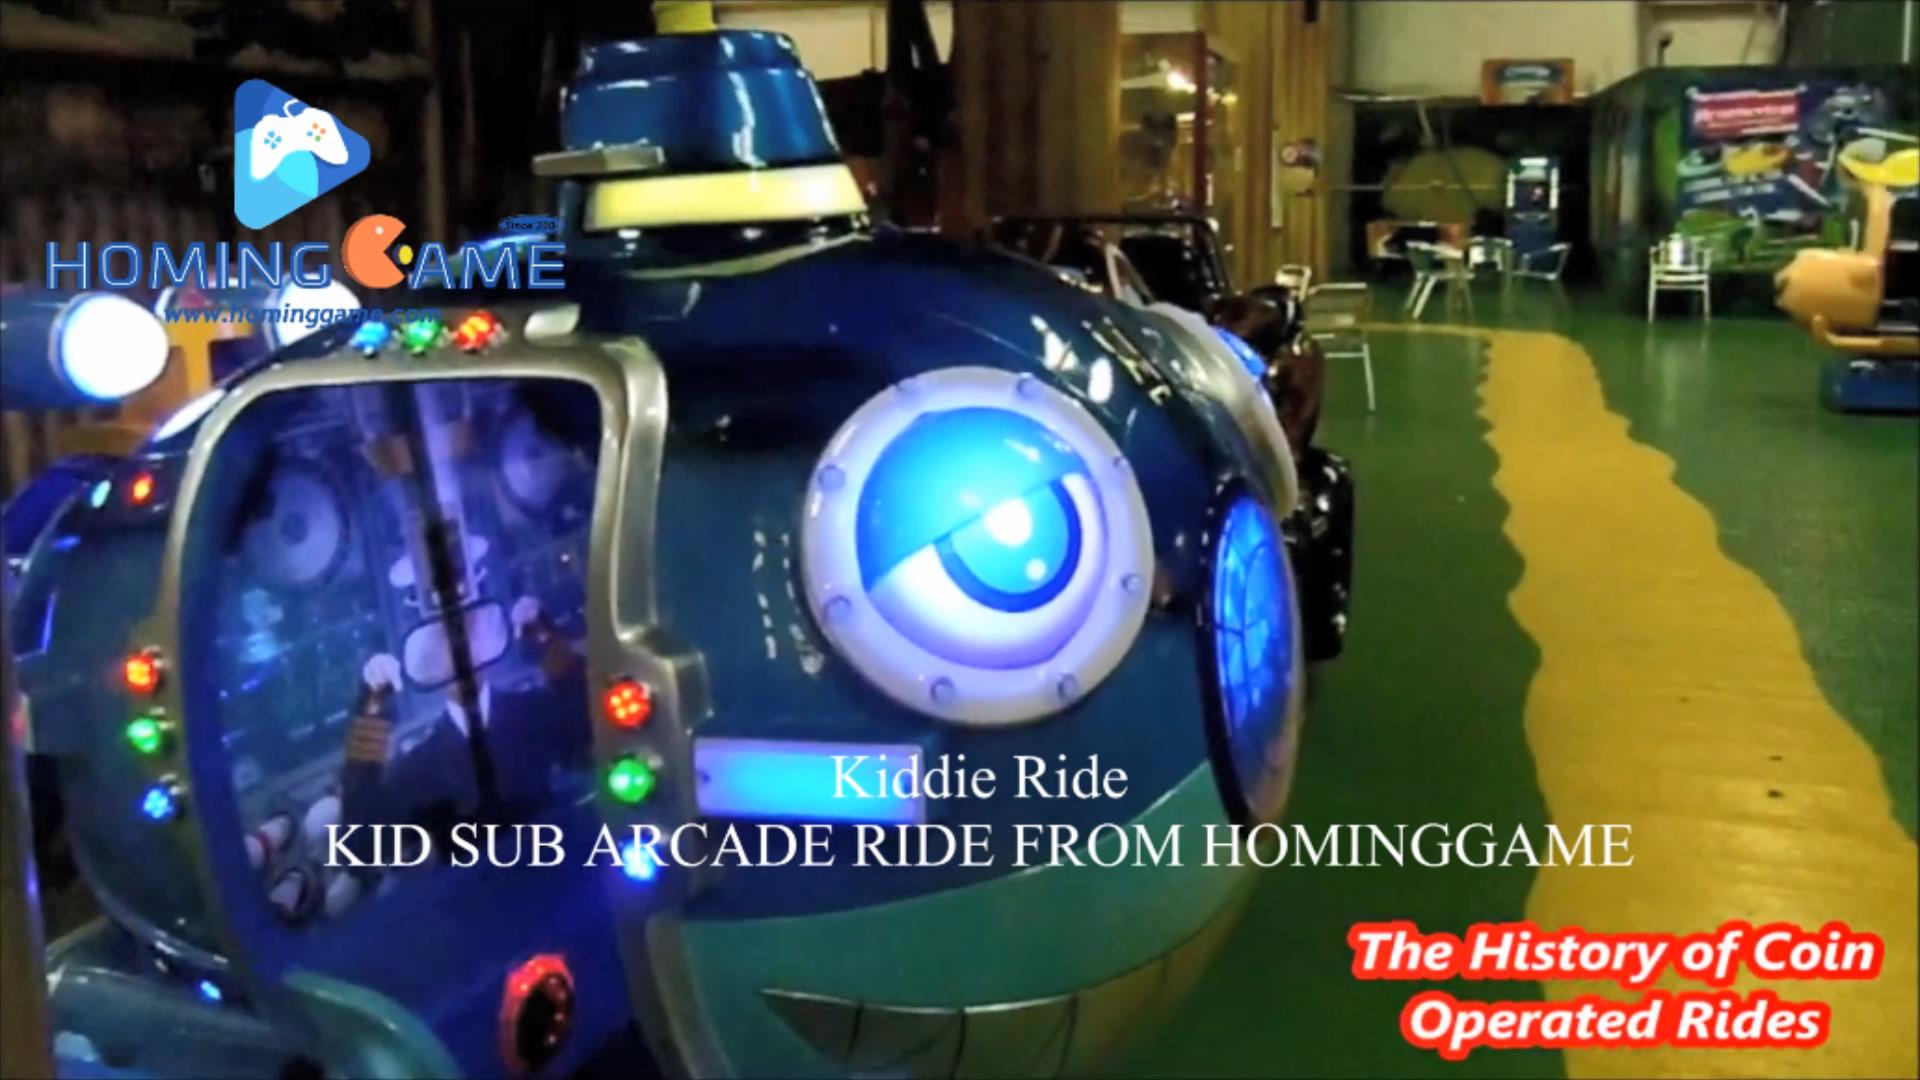 Coin Operated Arcade Kiddie Sub Submarine Arcade Game